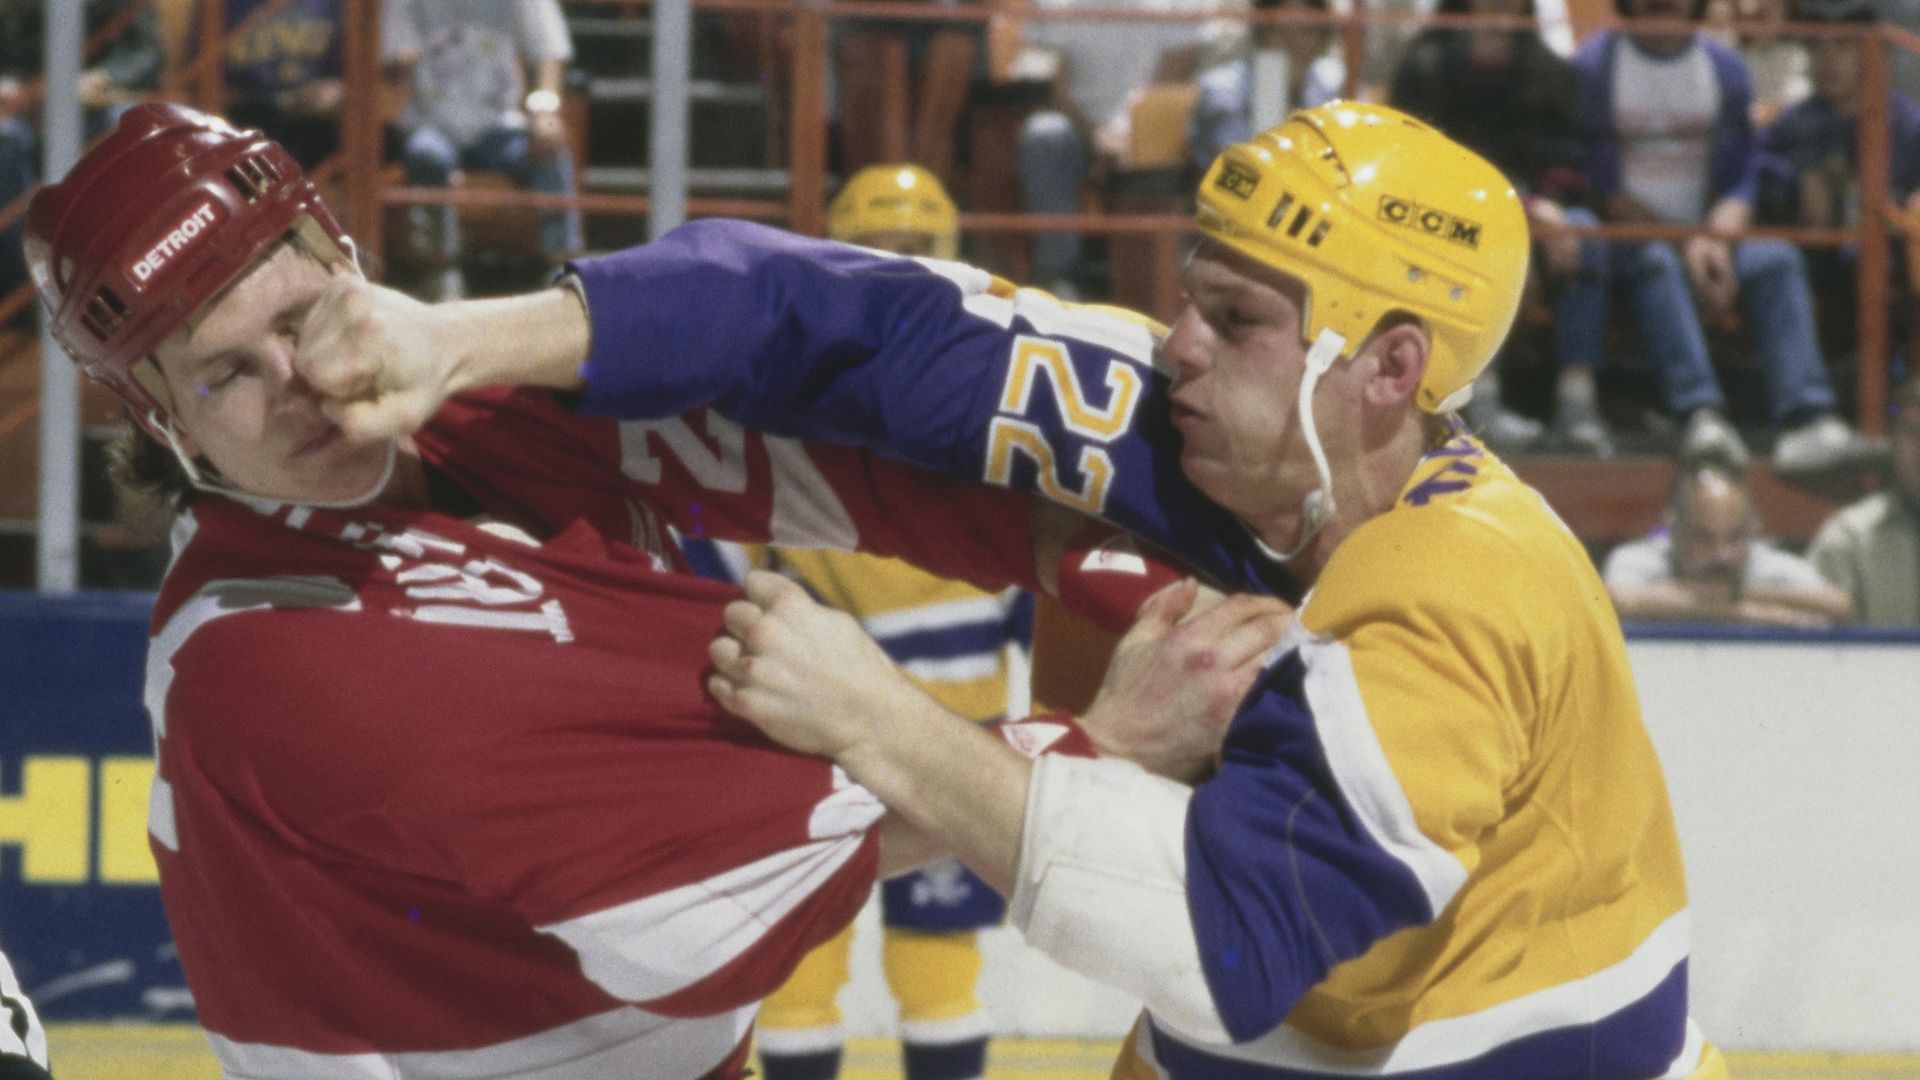 hockey players fighting